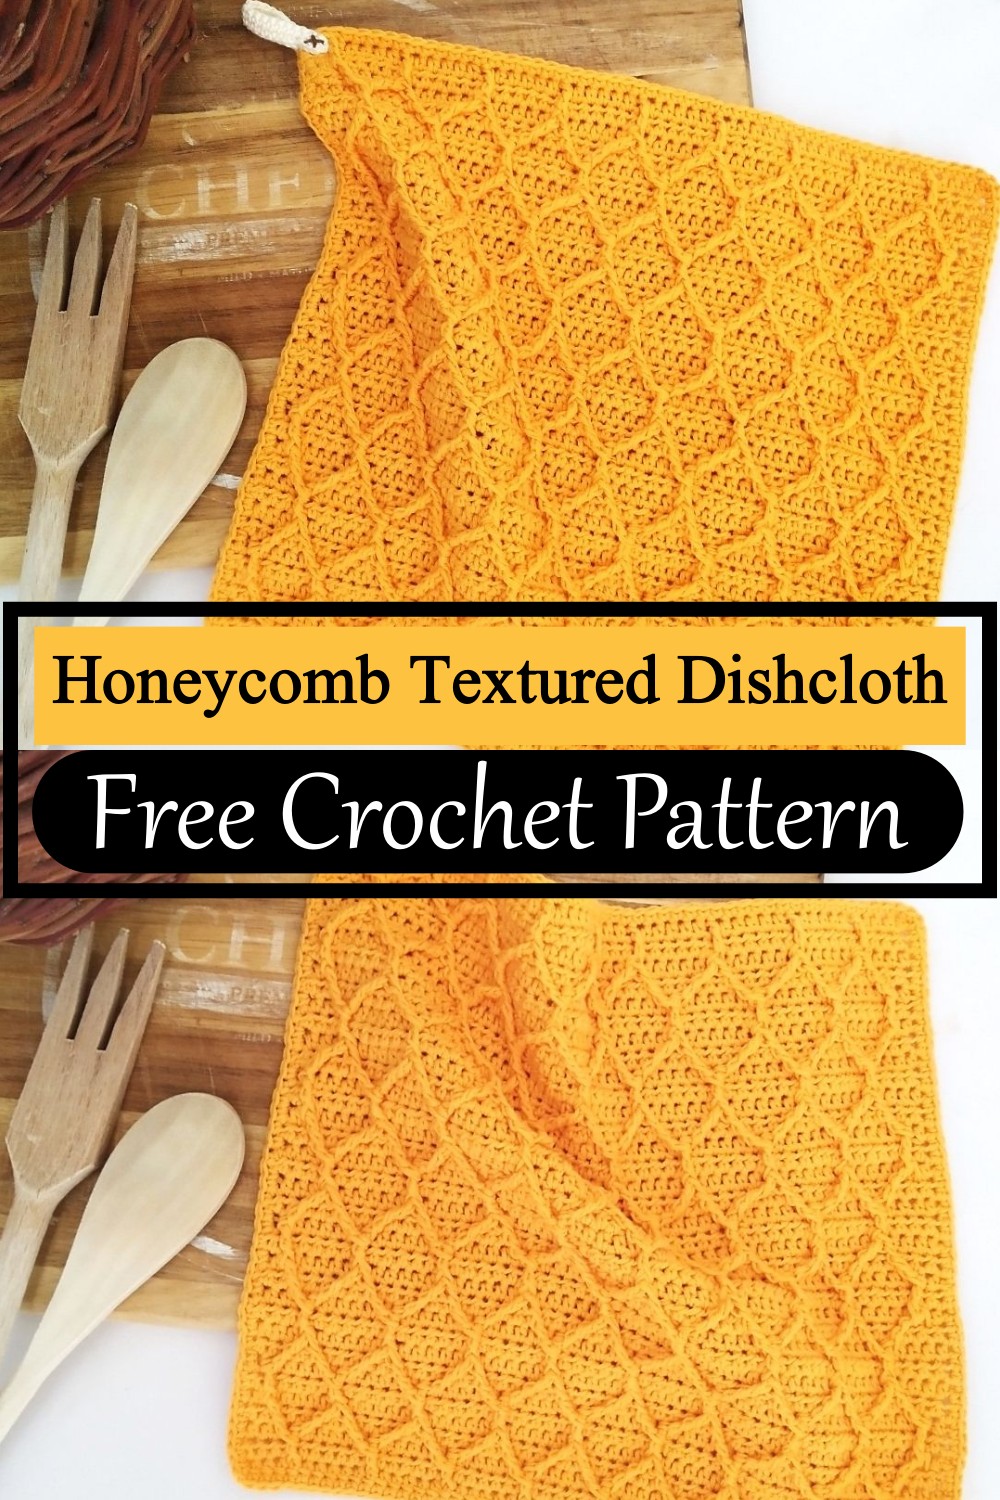 Honeycomb Textured Dishcloth